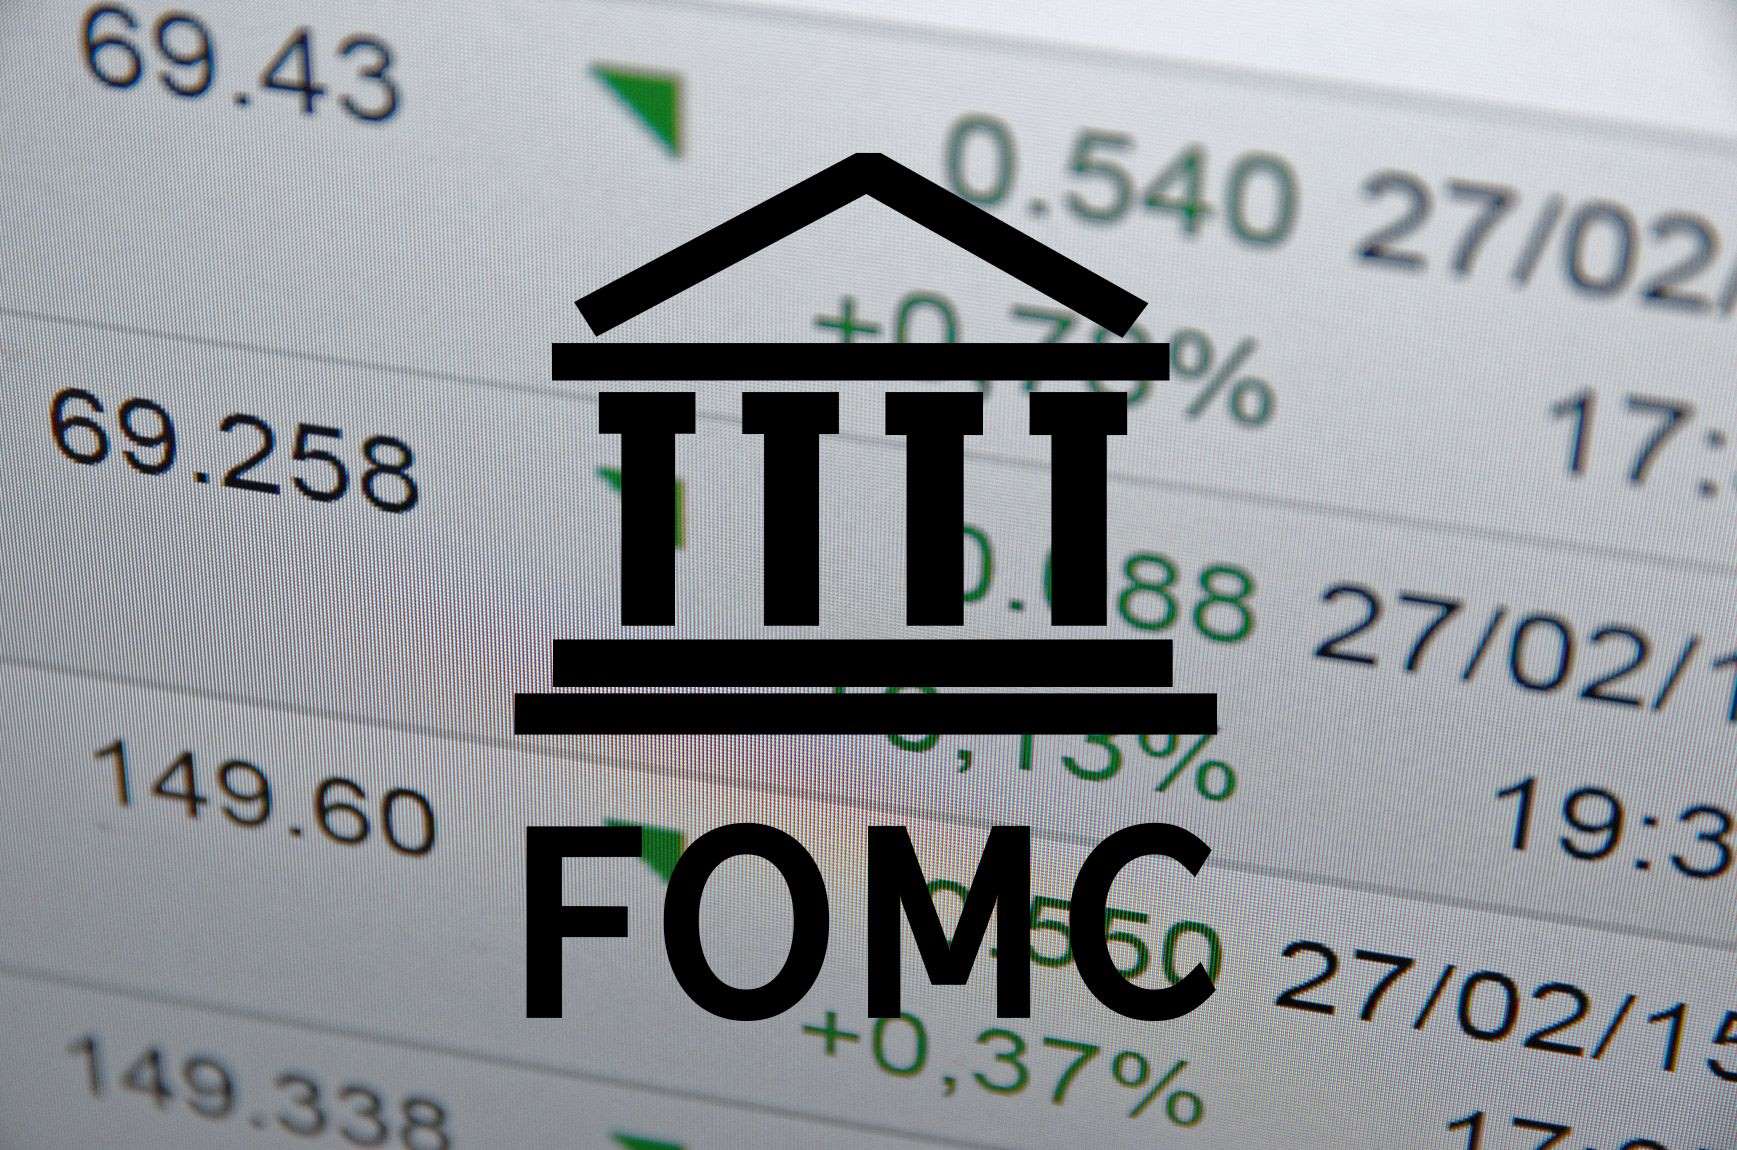 Markets anxious ahead of FOMC decision